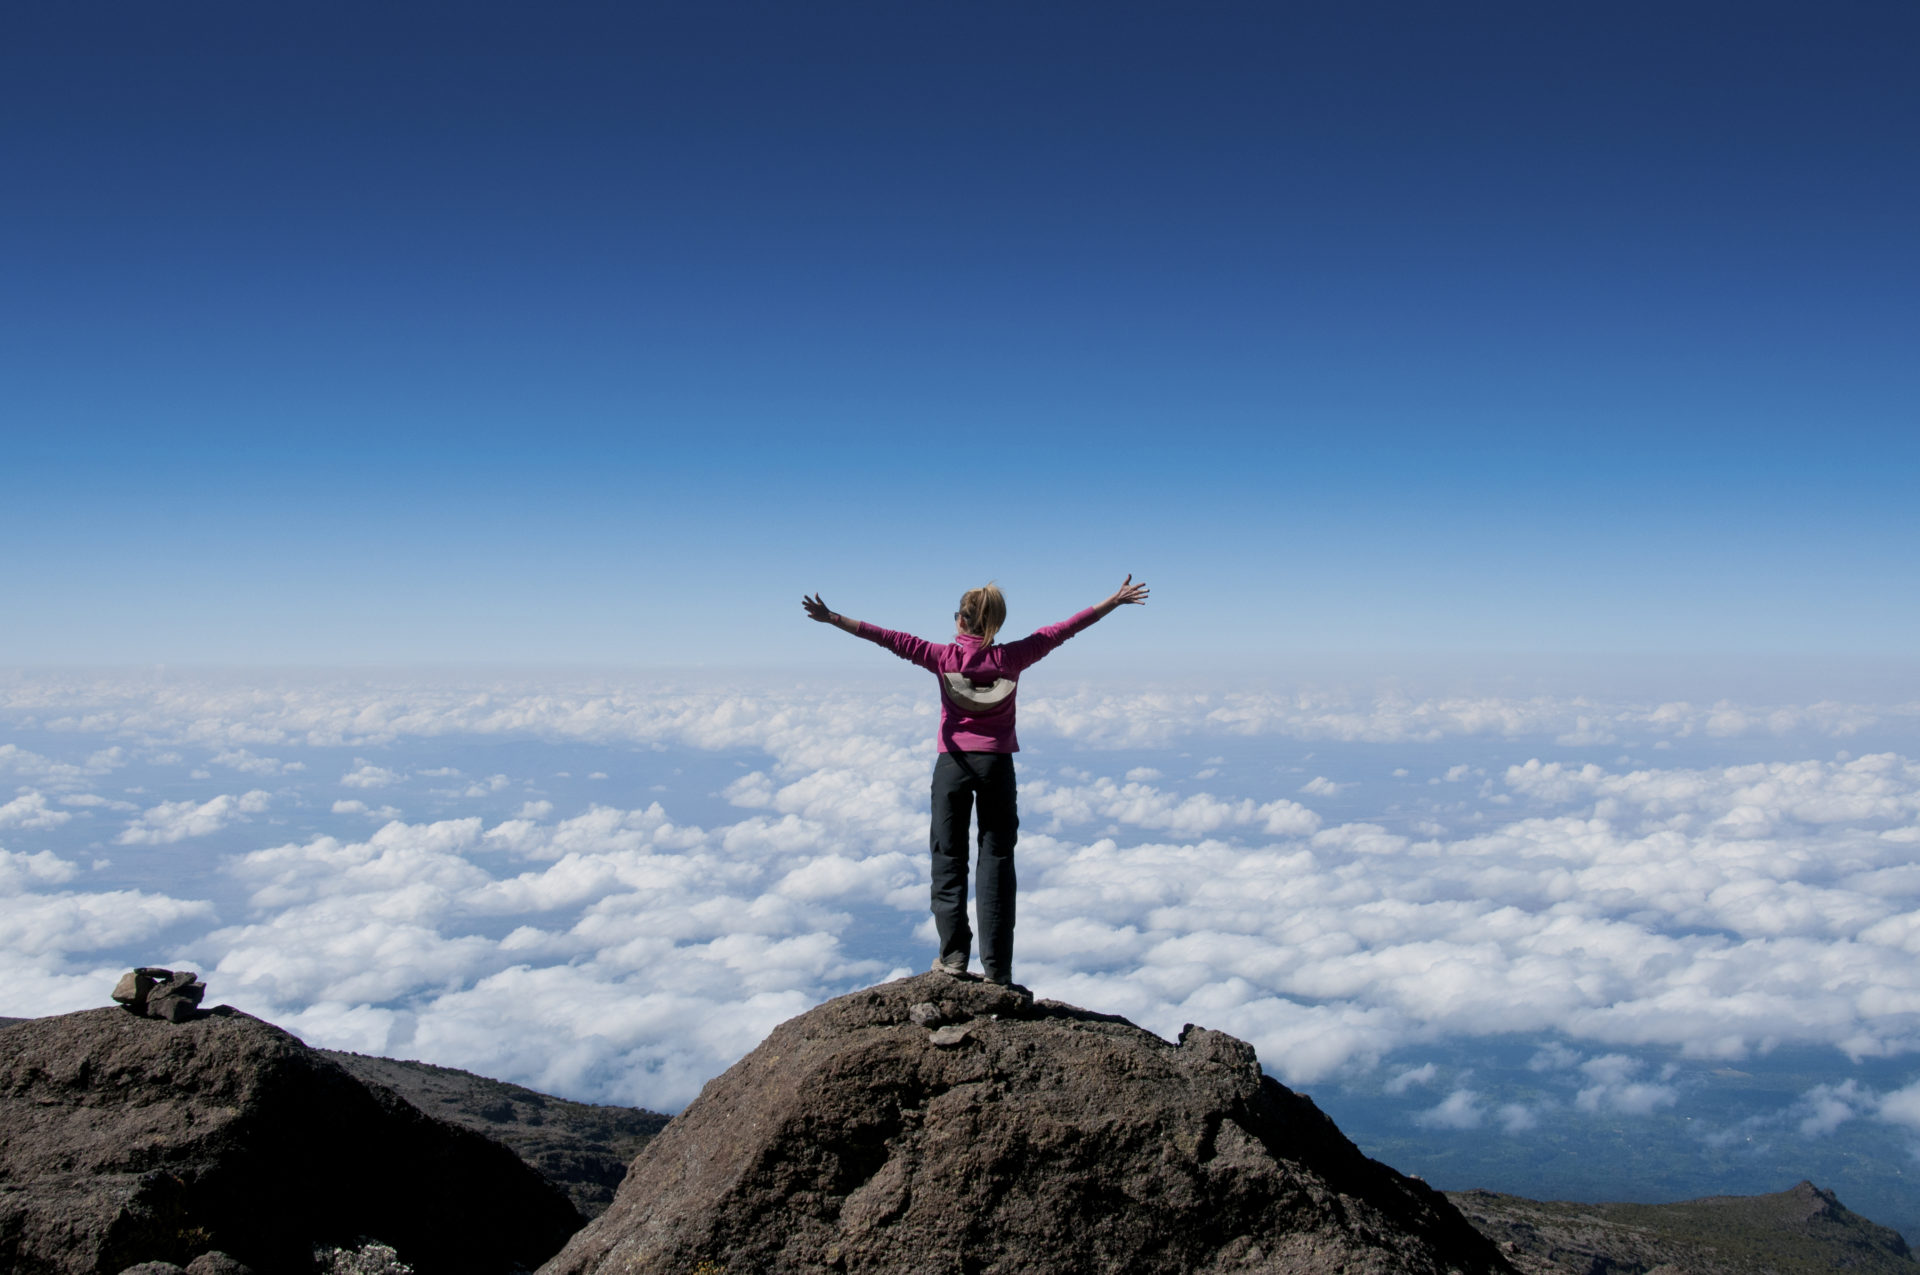 Trekking Mt. Kilimanjaro on women's trip